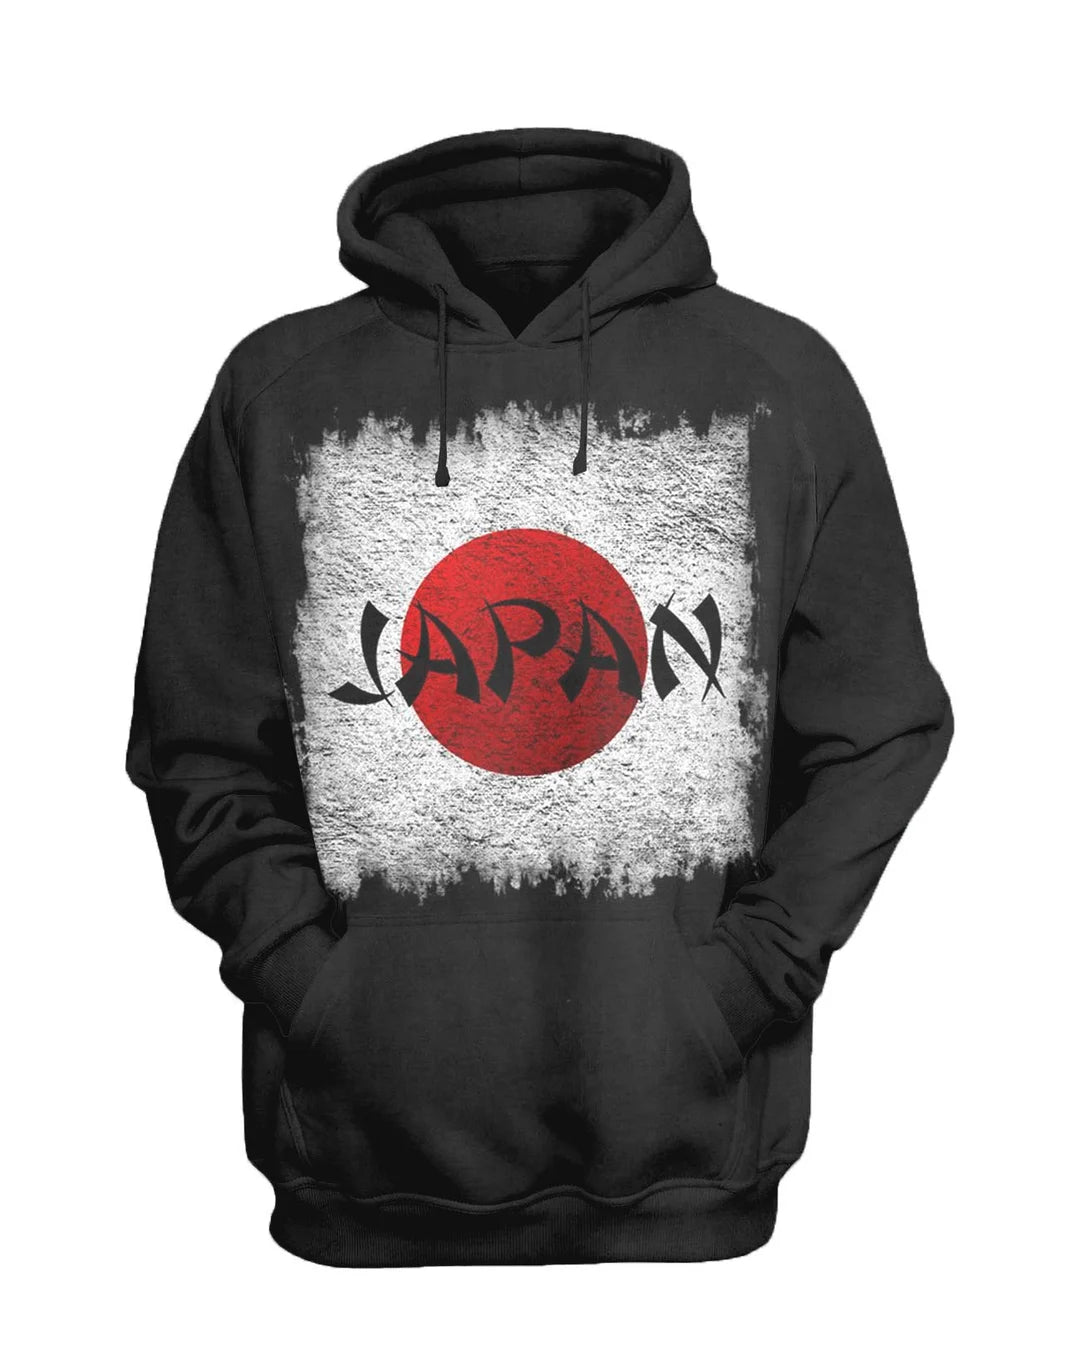 Japan Printed Sweatshirt Set - DUVAL